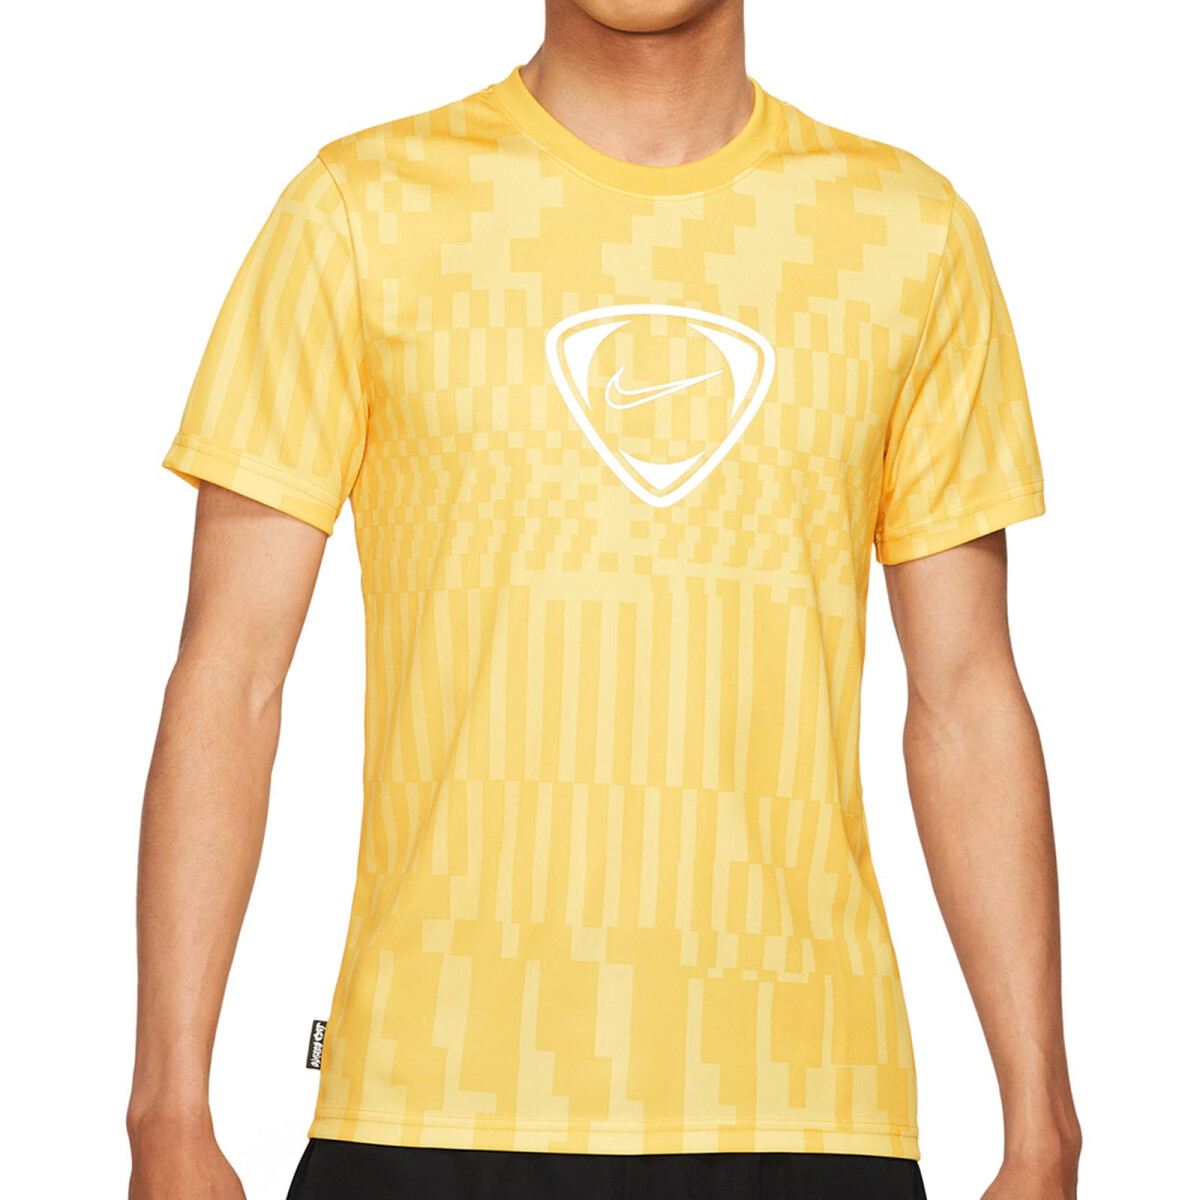 Remera Nike Futbol Hombre Top Ss Fp Jb Saturn Gold/Pollen - Color Único 